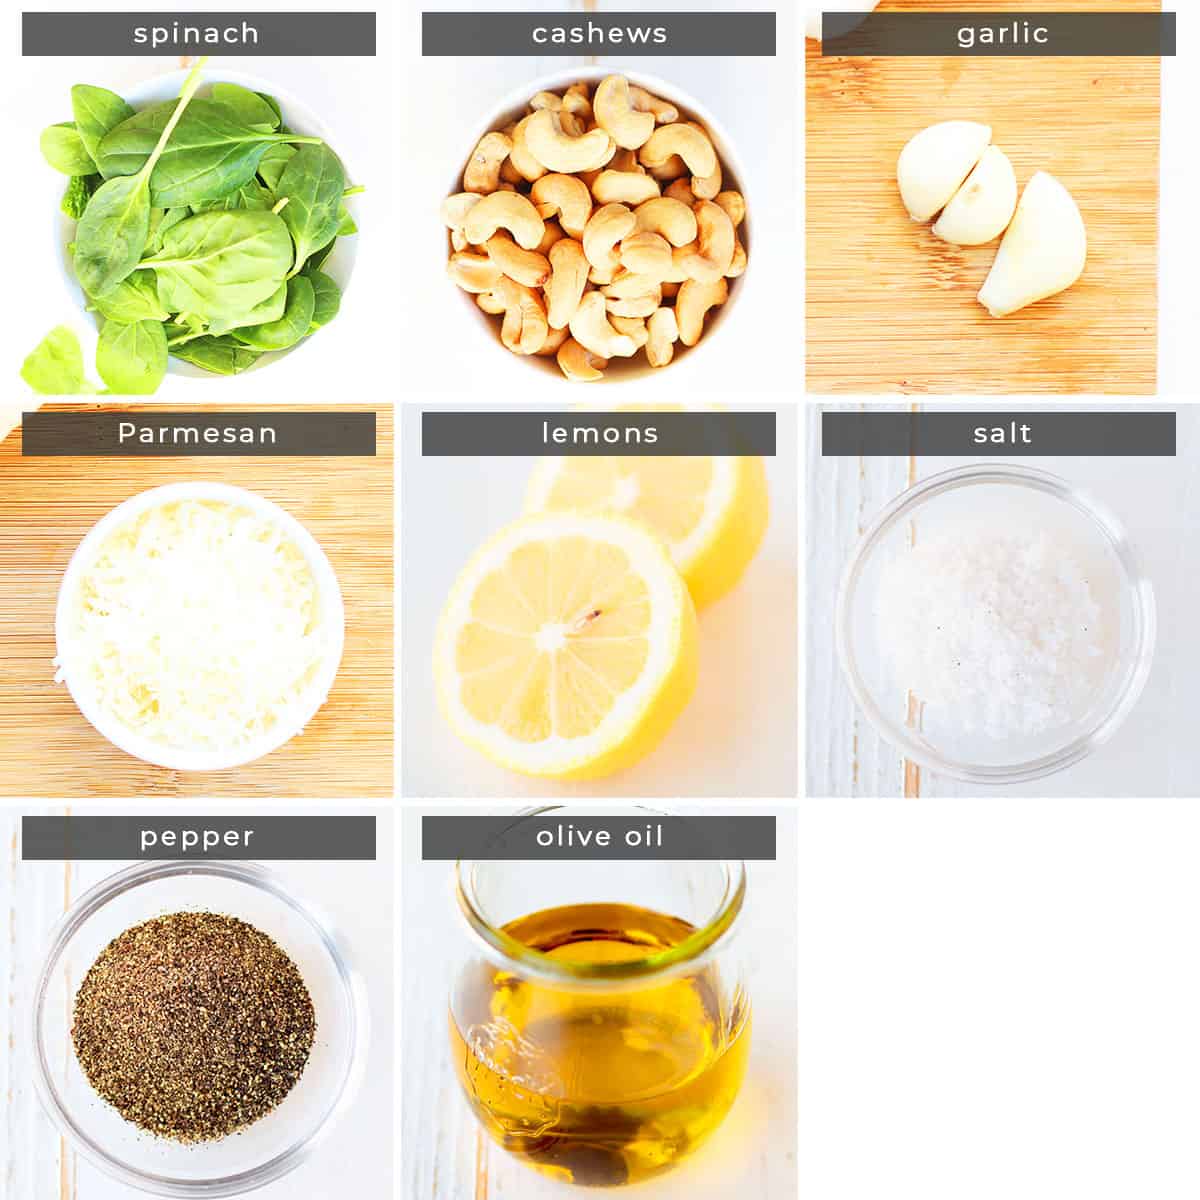 Image showing recipe ingredients: spinach, cashews, garlic, Parmesan, lemons, salt, pepper, and olive oil.